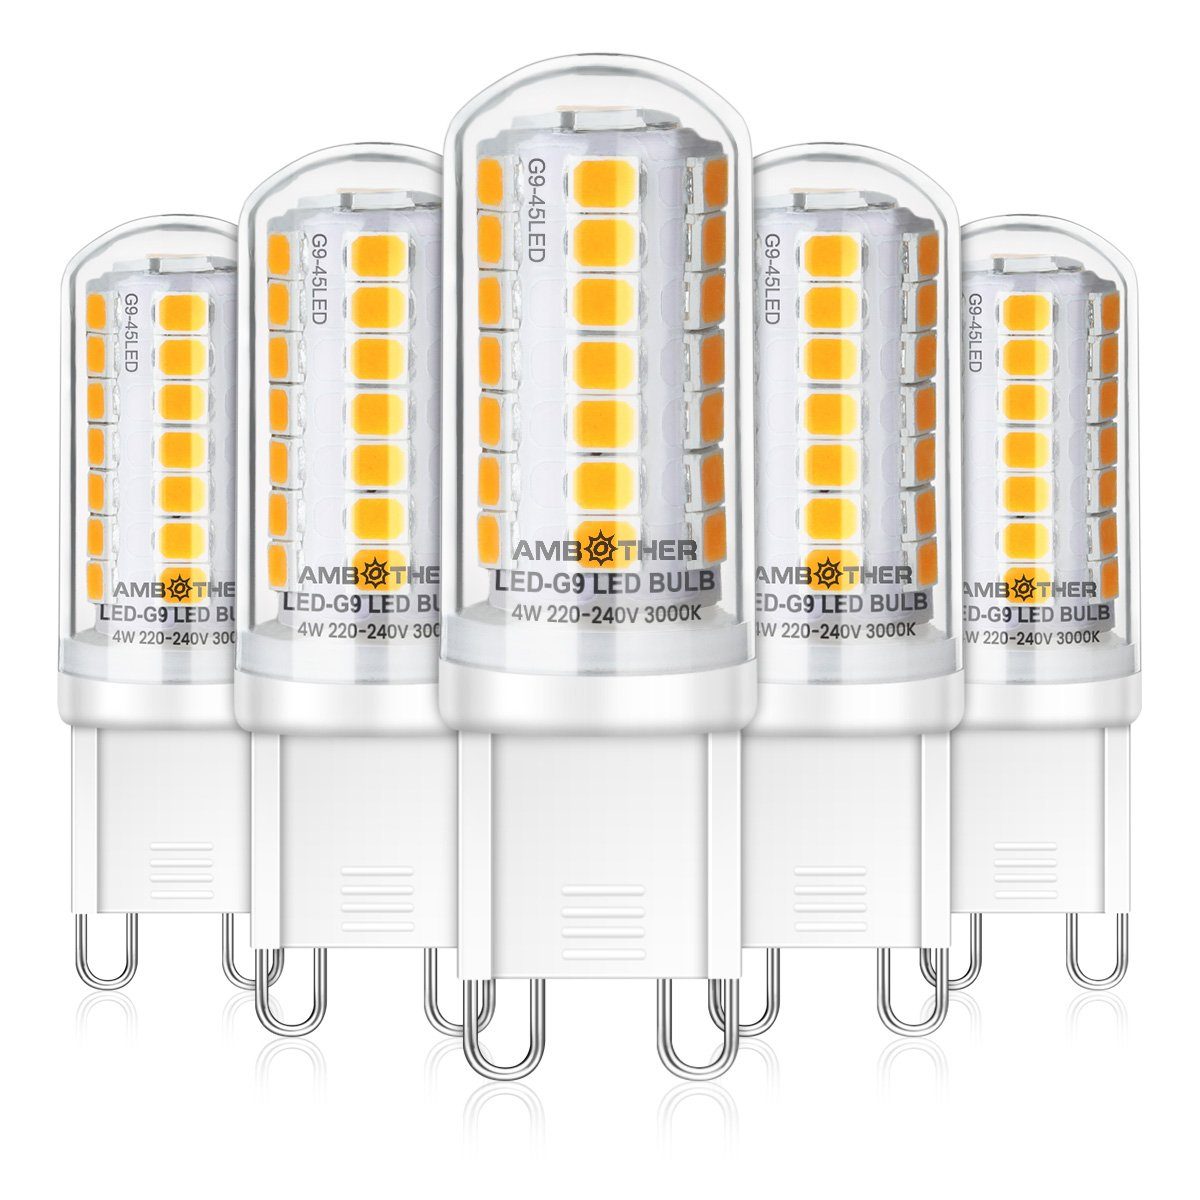 Insma Glühbirne Leuchtmittel 4W LED Halogenlampe Warmweiß 450LM Flutlichtstrahler, 5er G9